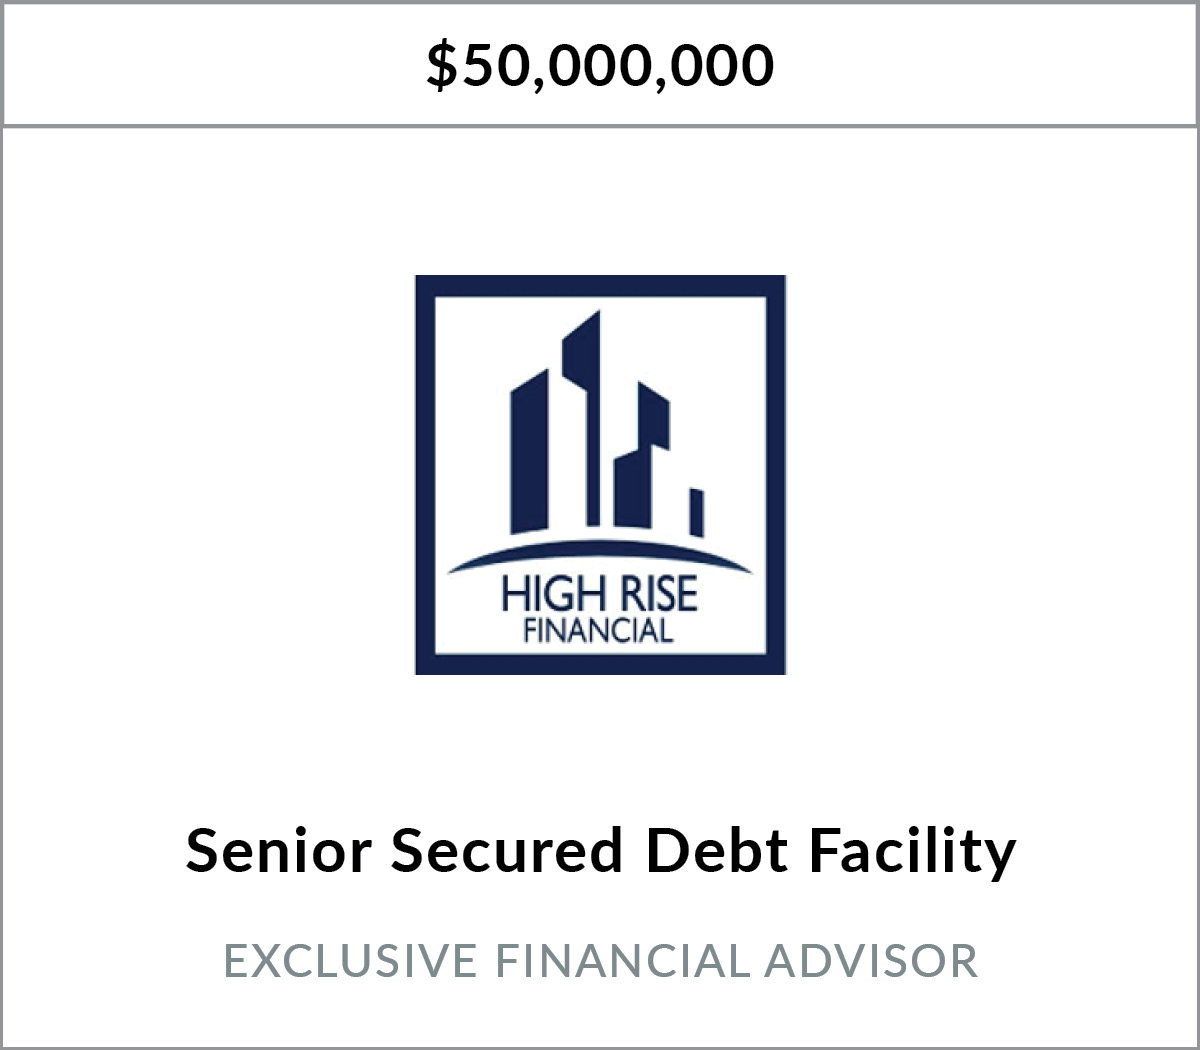 Bryant Park Capital Secures A $50 Million Senior Debt Facility For High Rise Financial, LLC